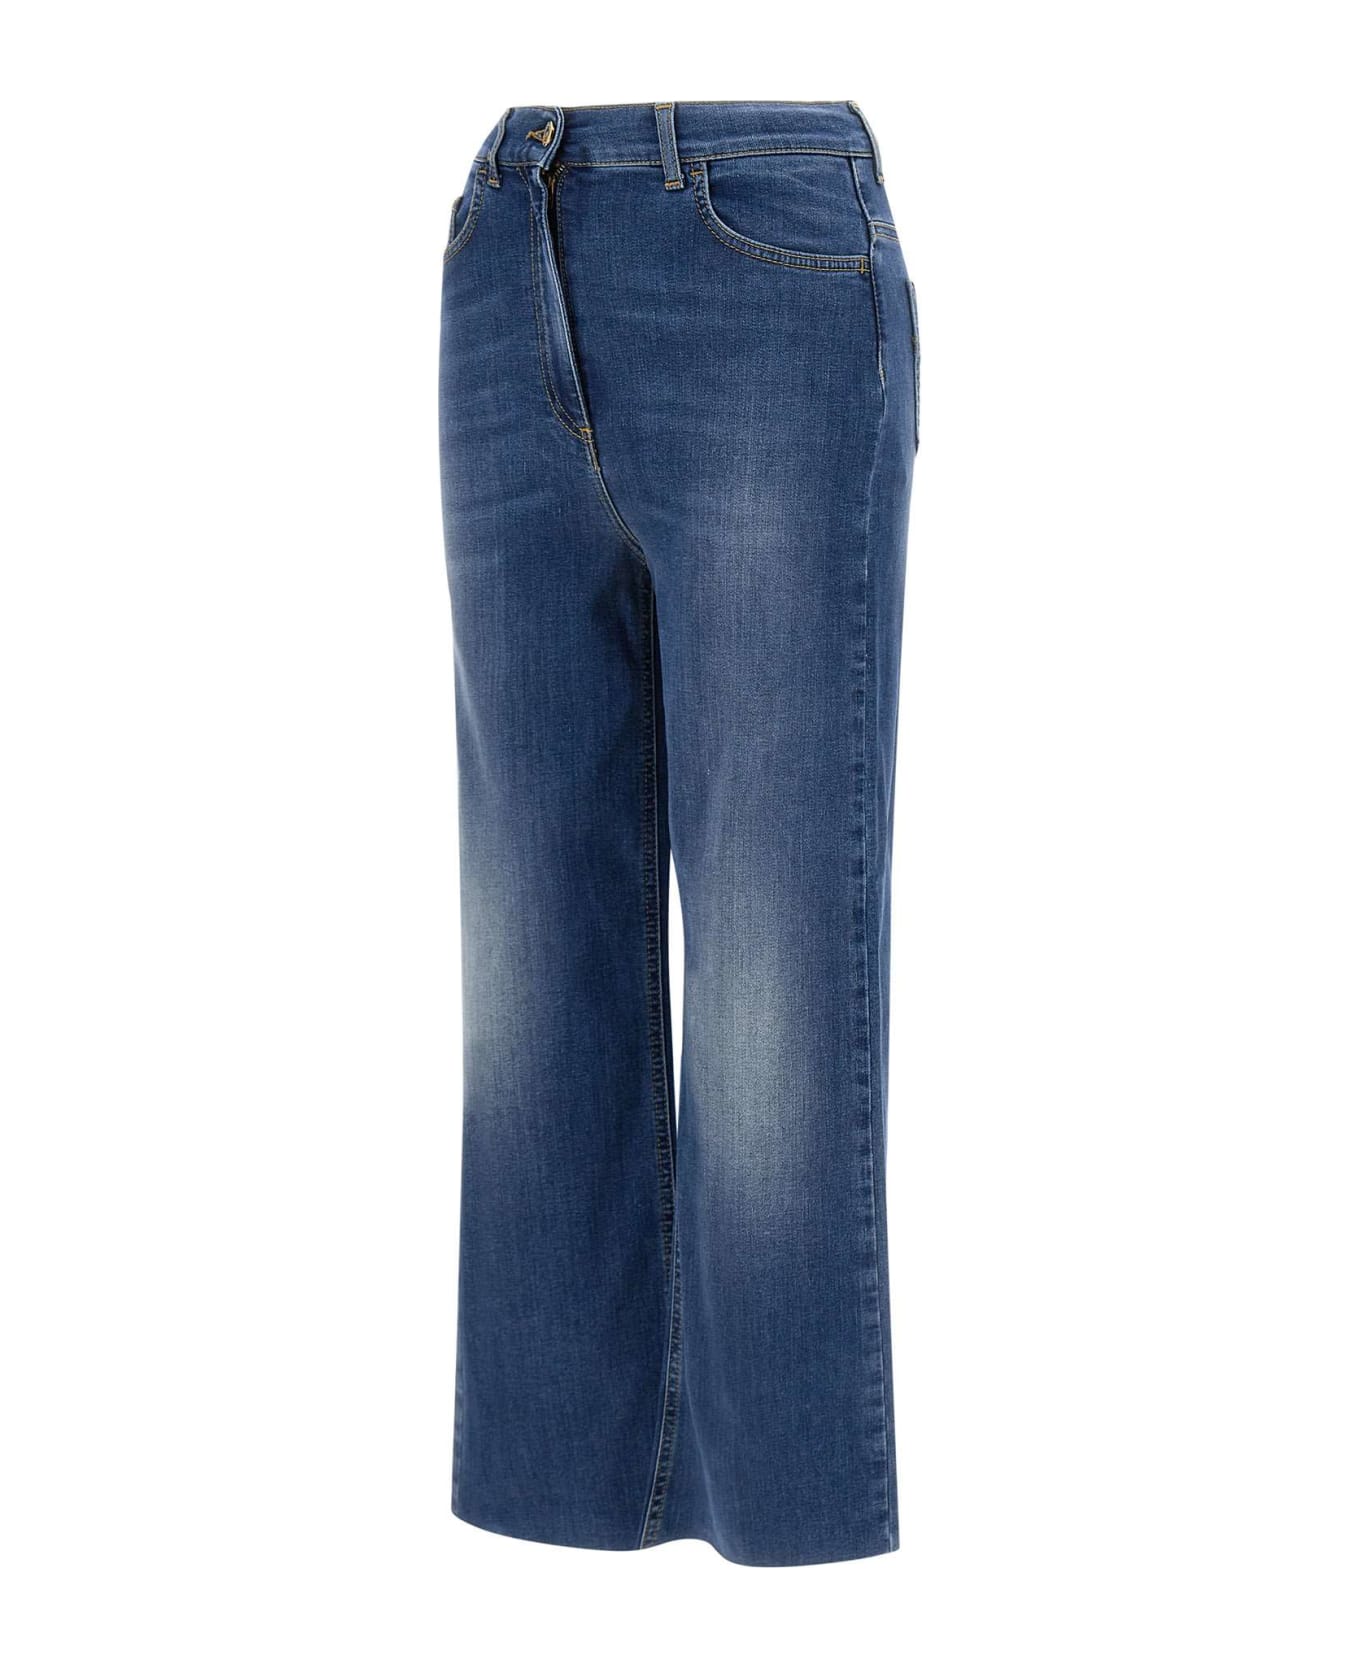 Elisabetta Franchi 'urban' Jeans - Blue Denim